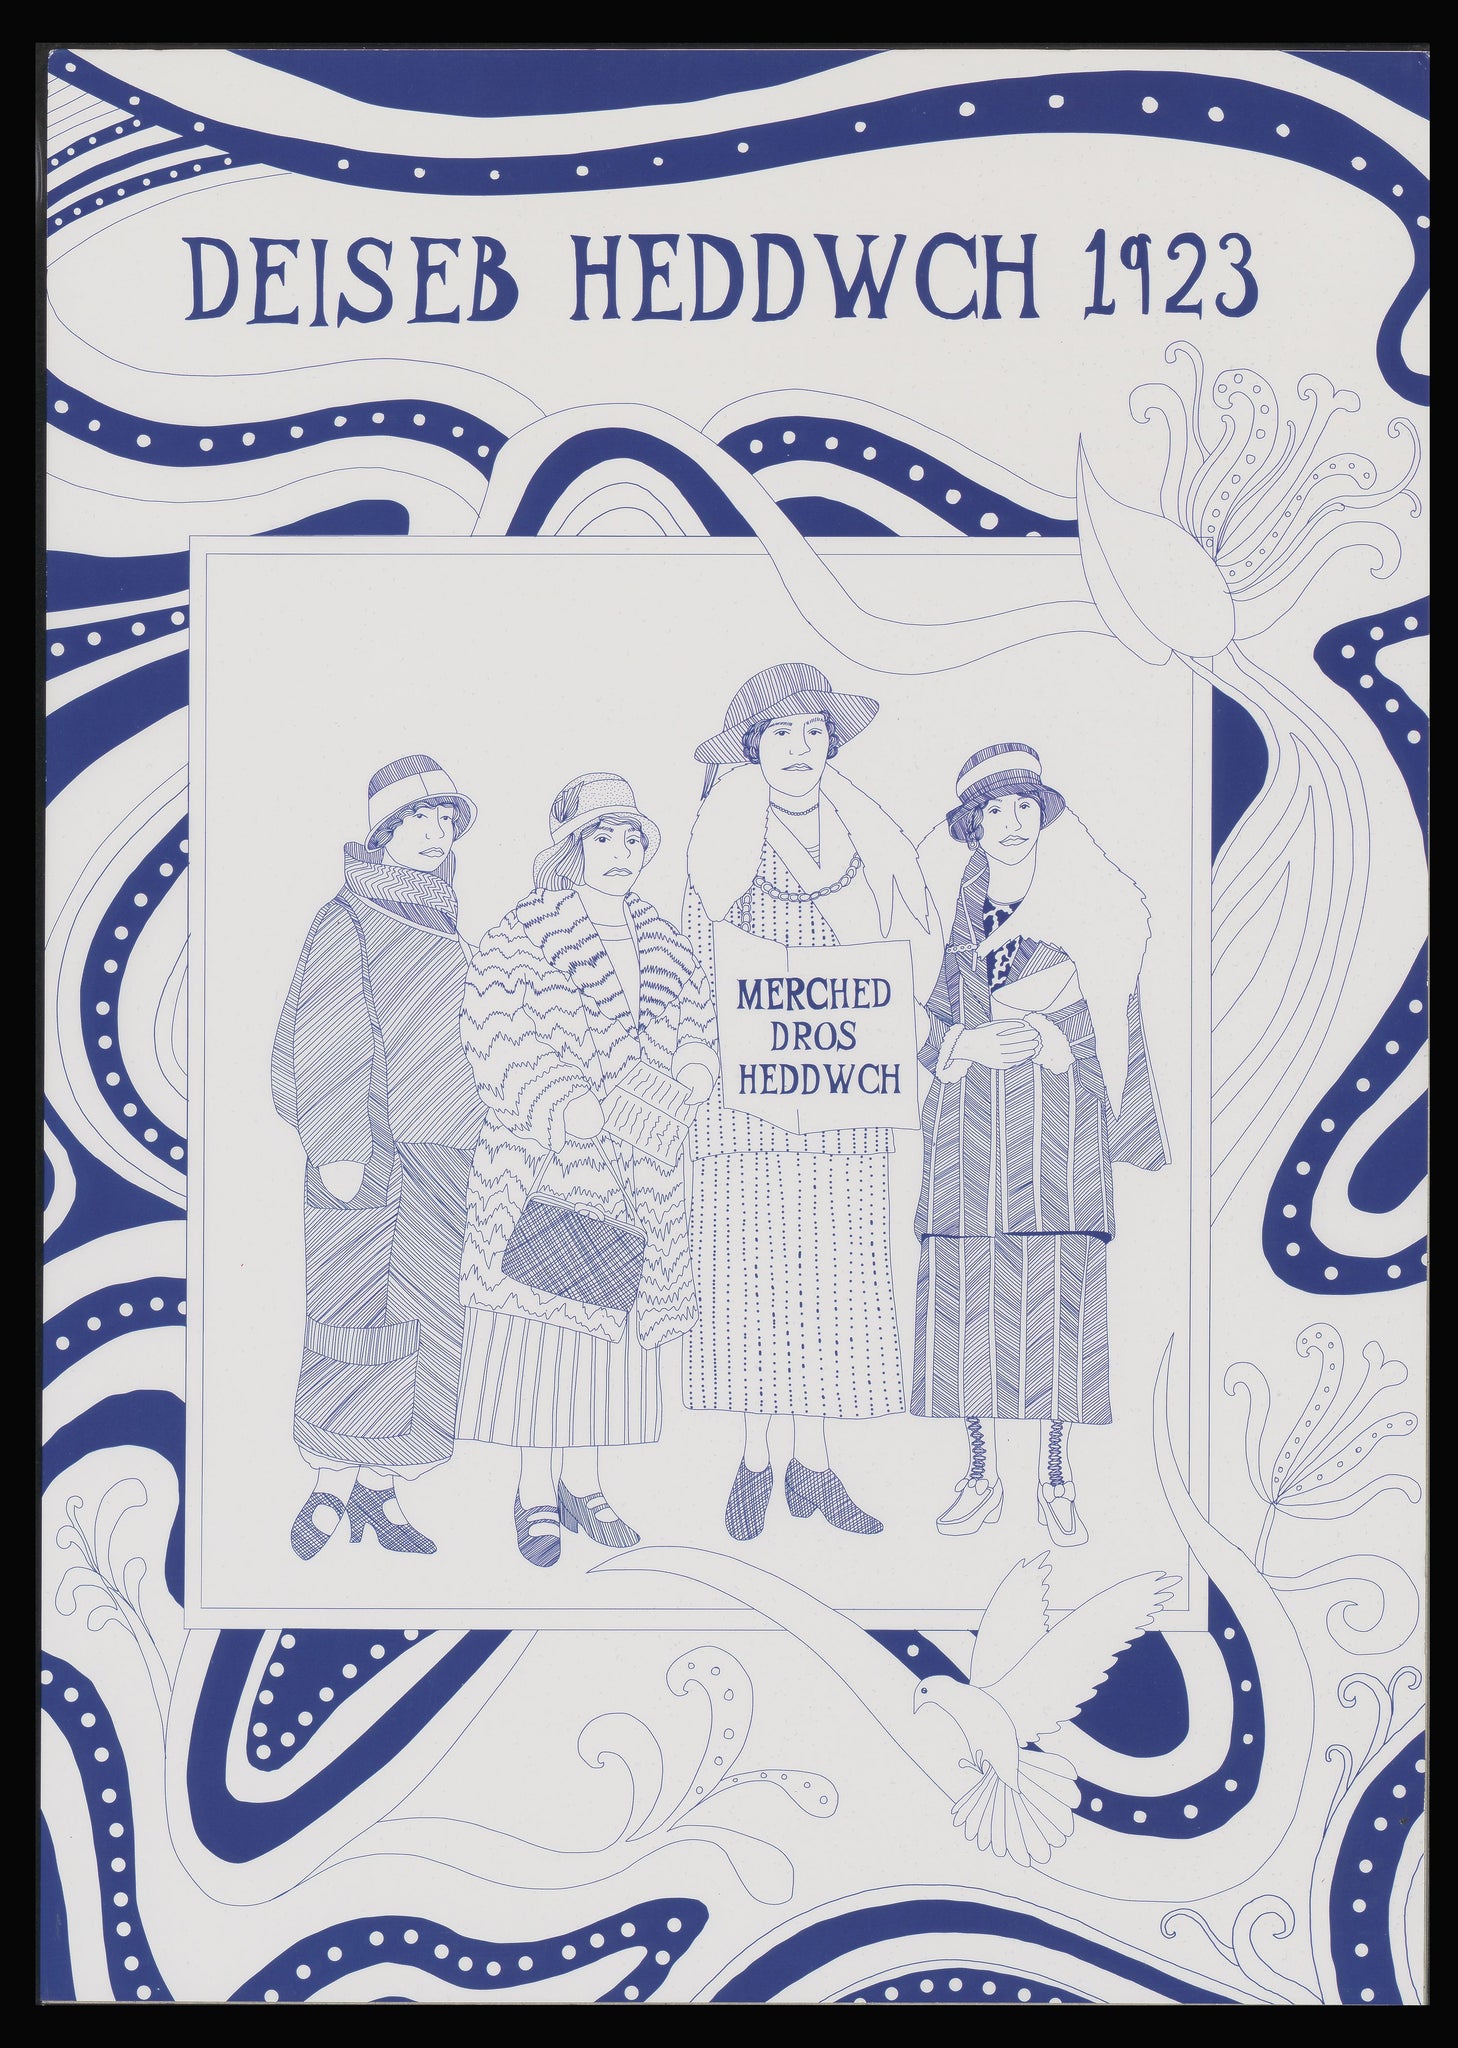 'Deiseb Heddwch 1923' (Womens Peace Centenary 1923) Poster by Efa Lois